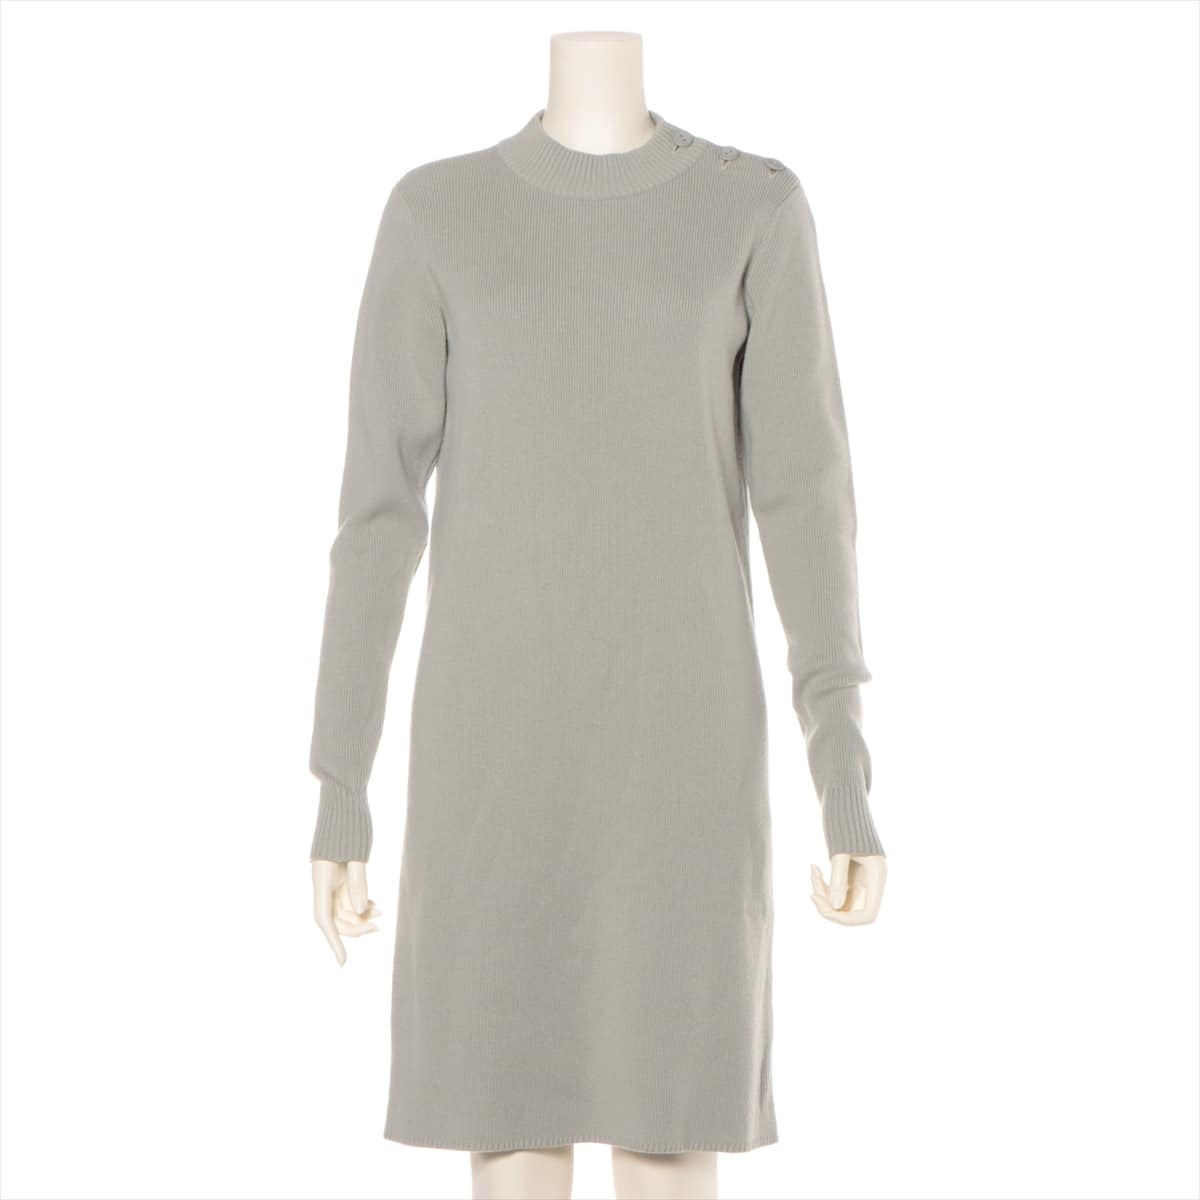 Hermès Wool & Cashmere Knit dress 36 Ladies' Grey